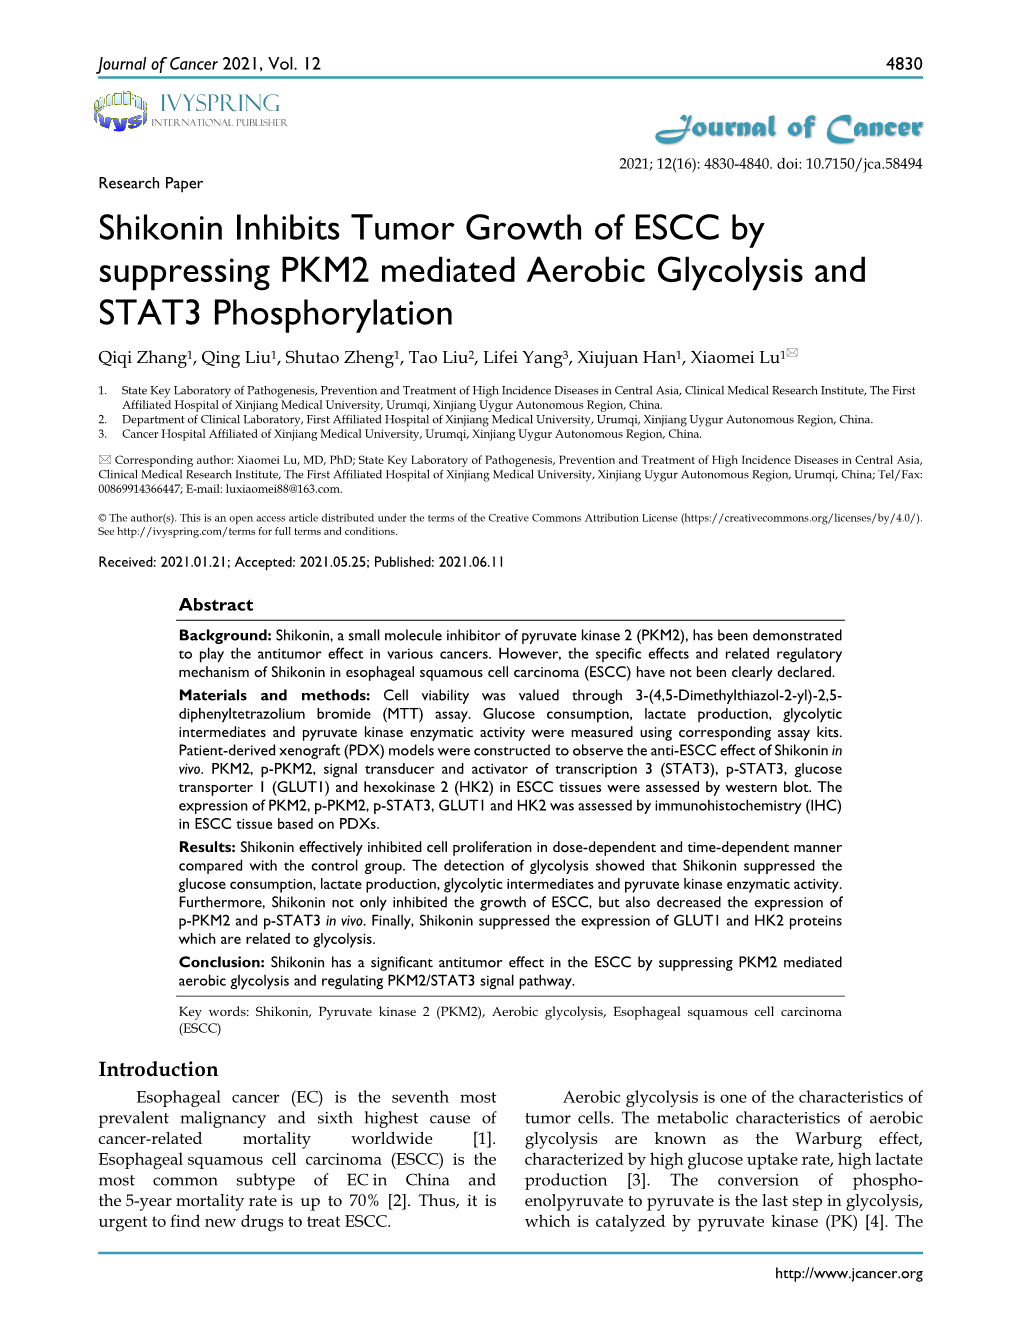 Shikonin Inhibits Tumor Growth of ESCC by Suppressing PKM2